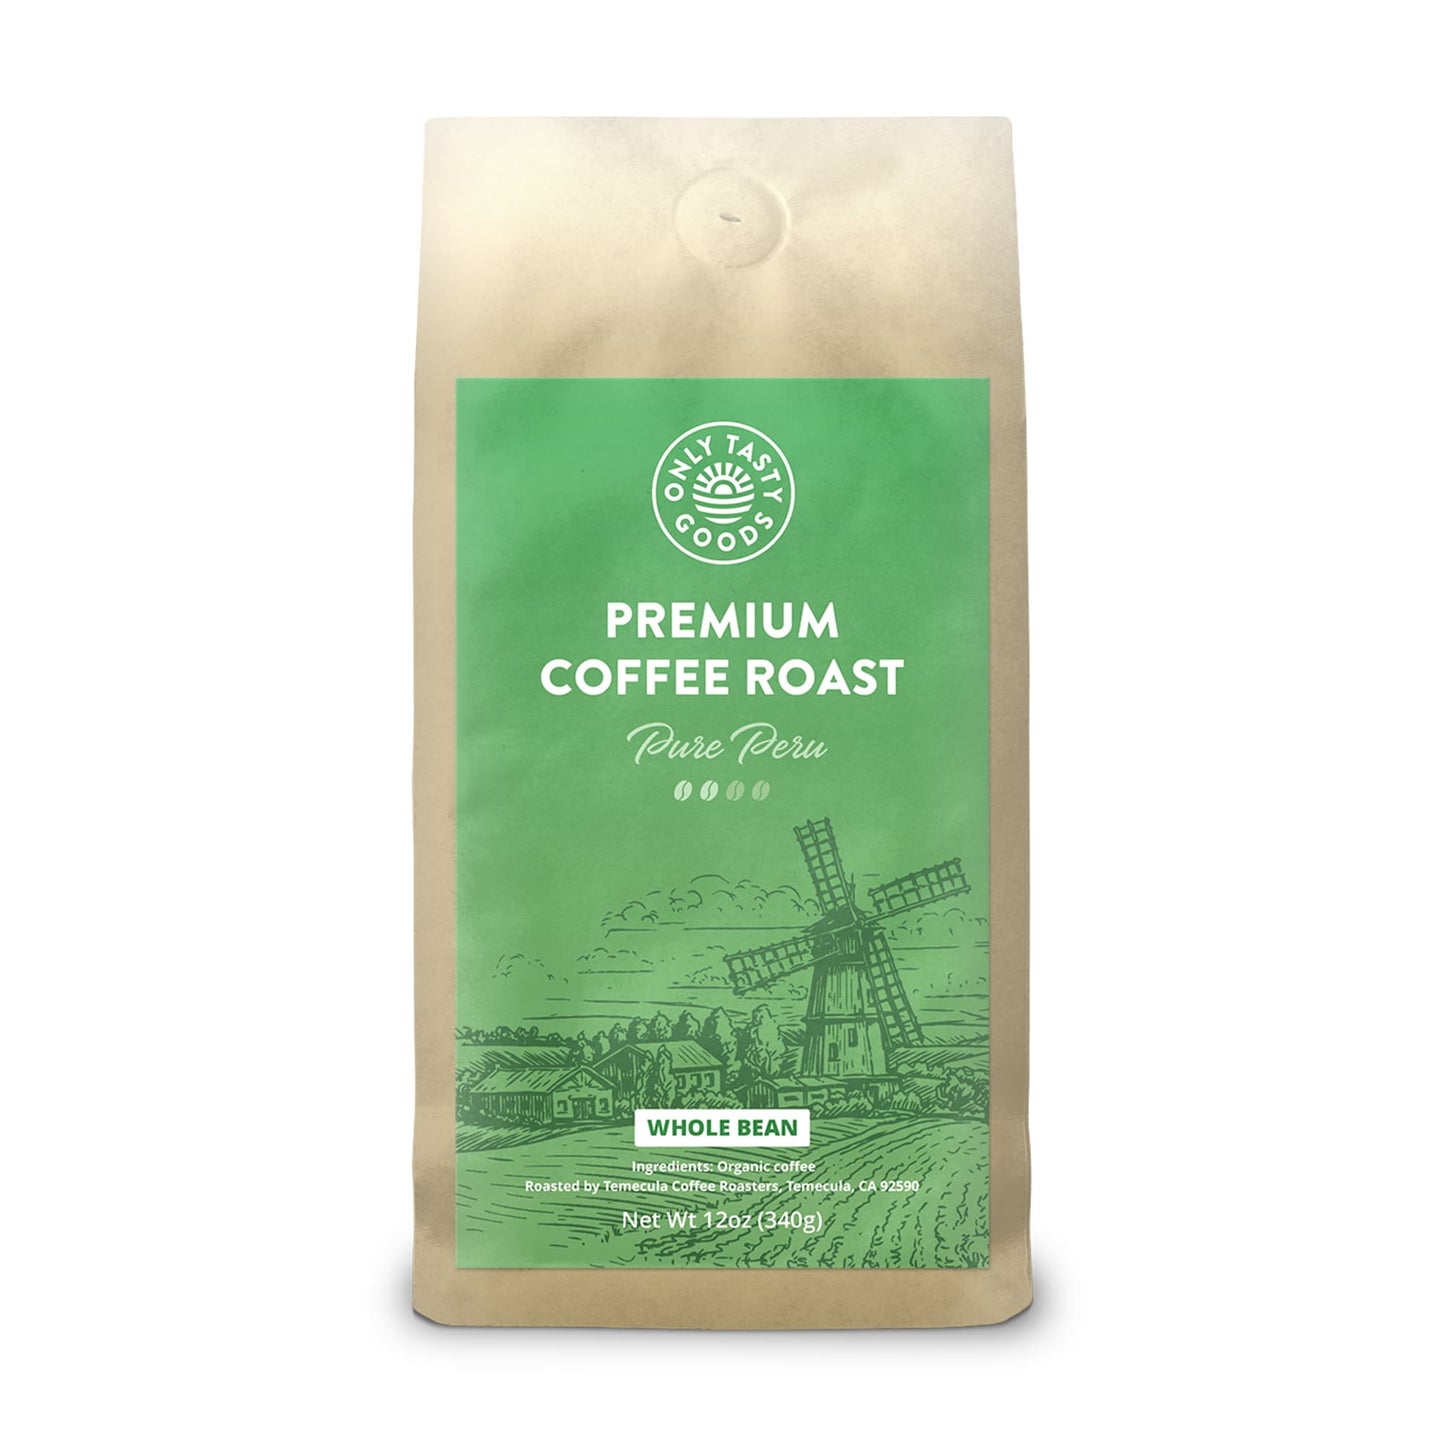 Premium Coffee Roast - Pure Peru - Fair Trade and Organic Coffee, Low Acidity Whole Bean-0